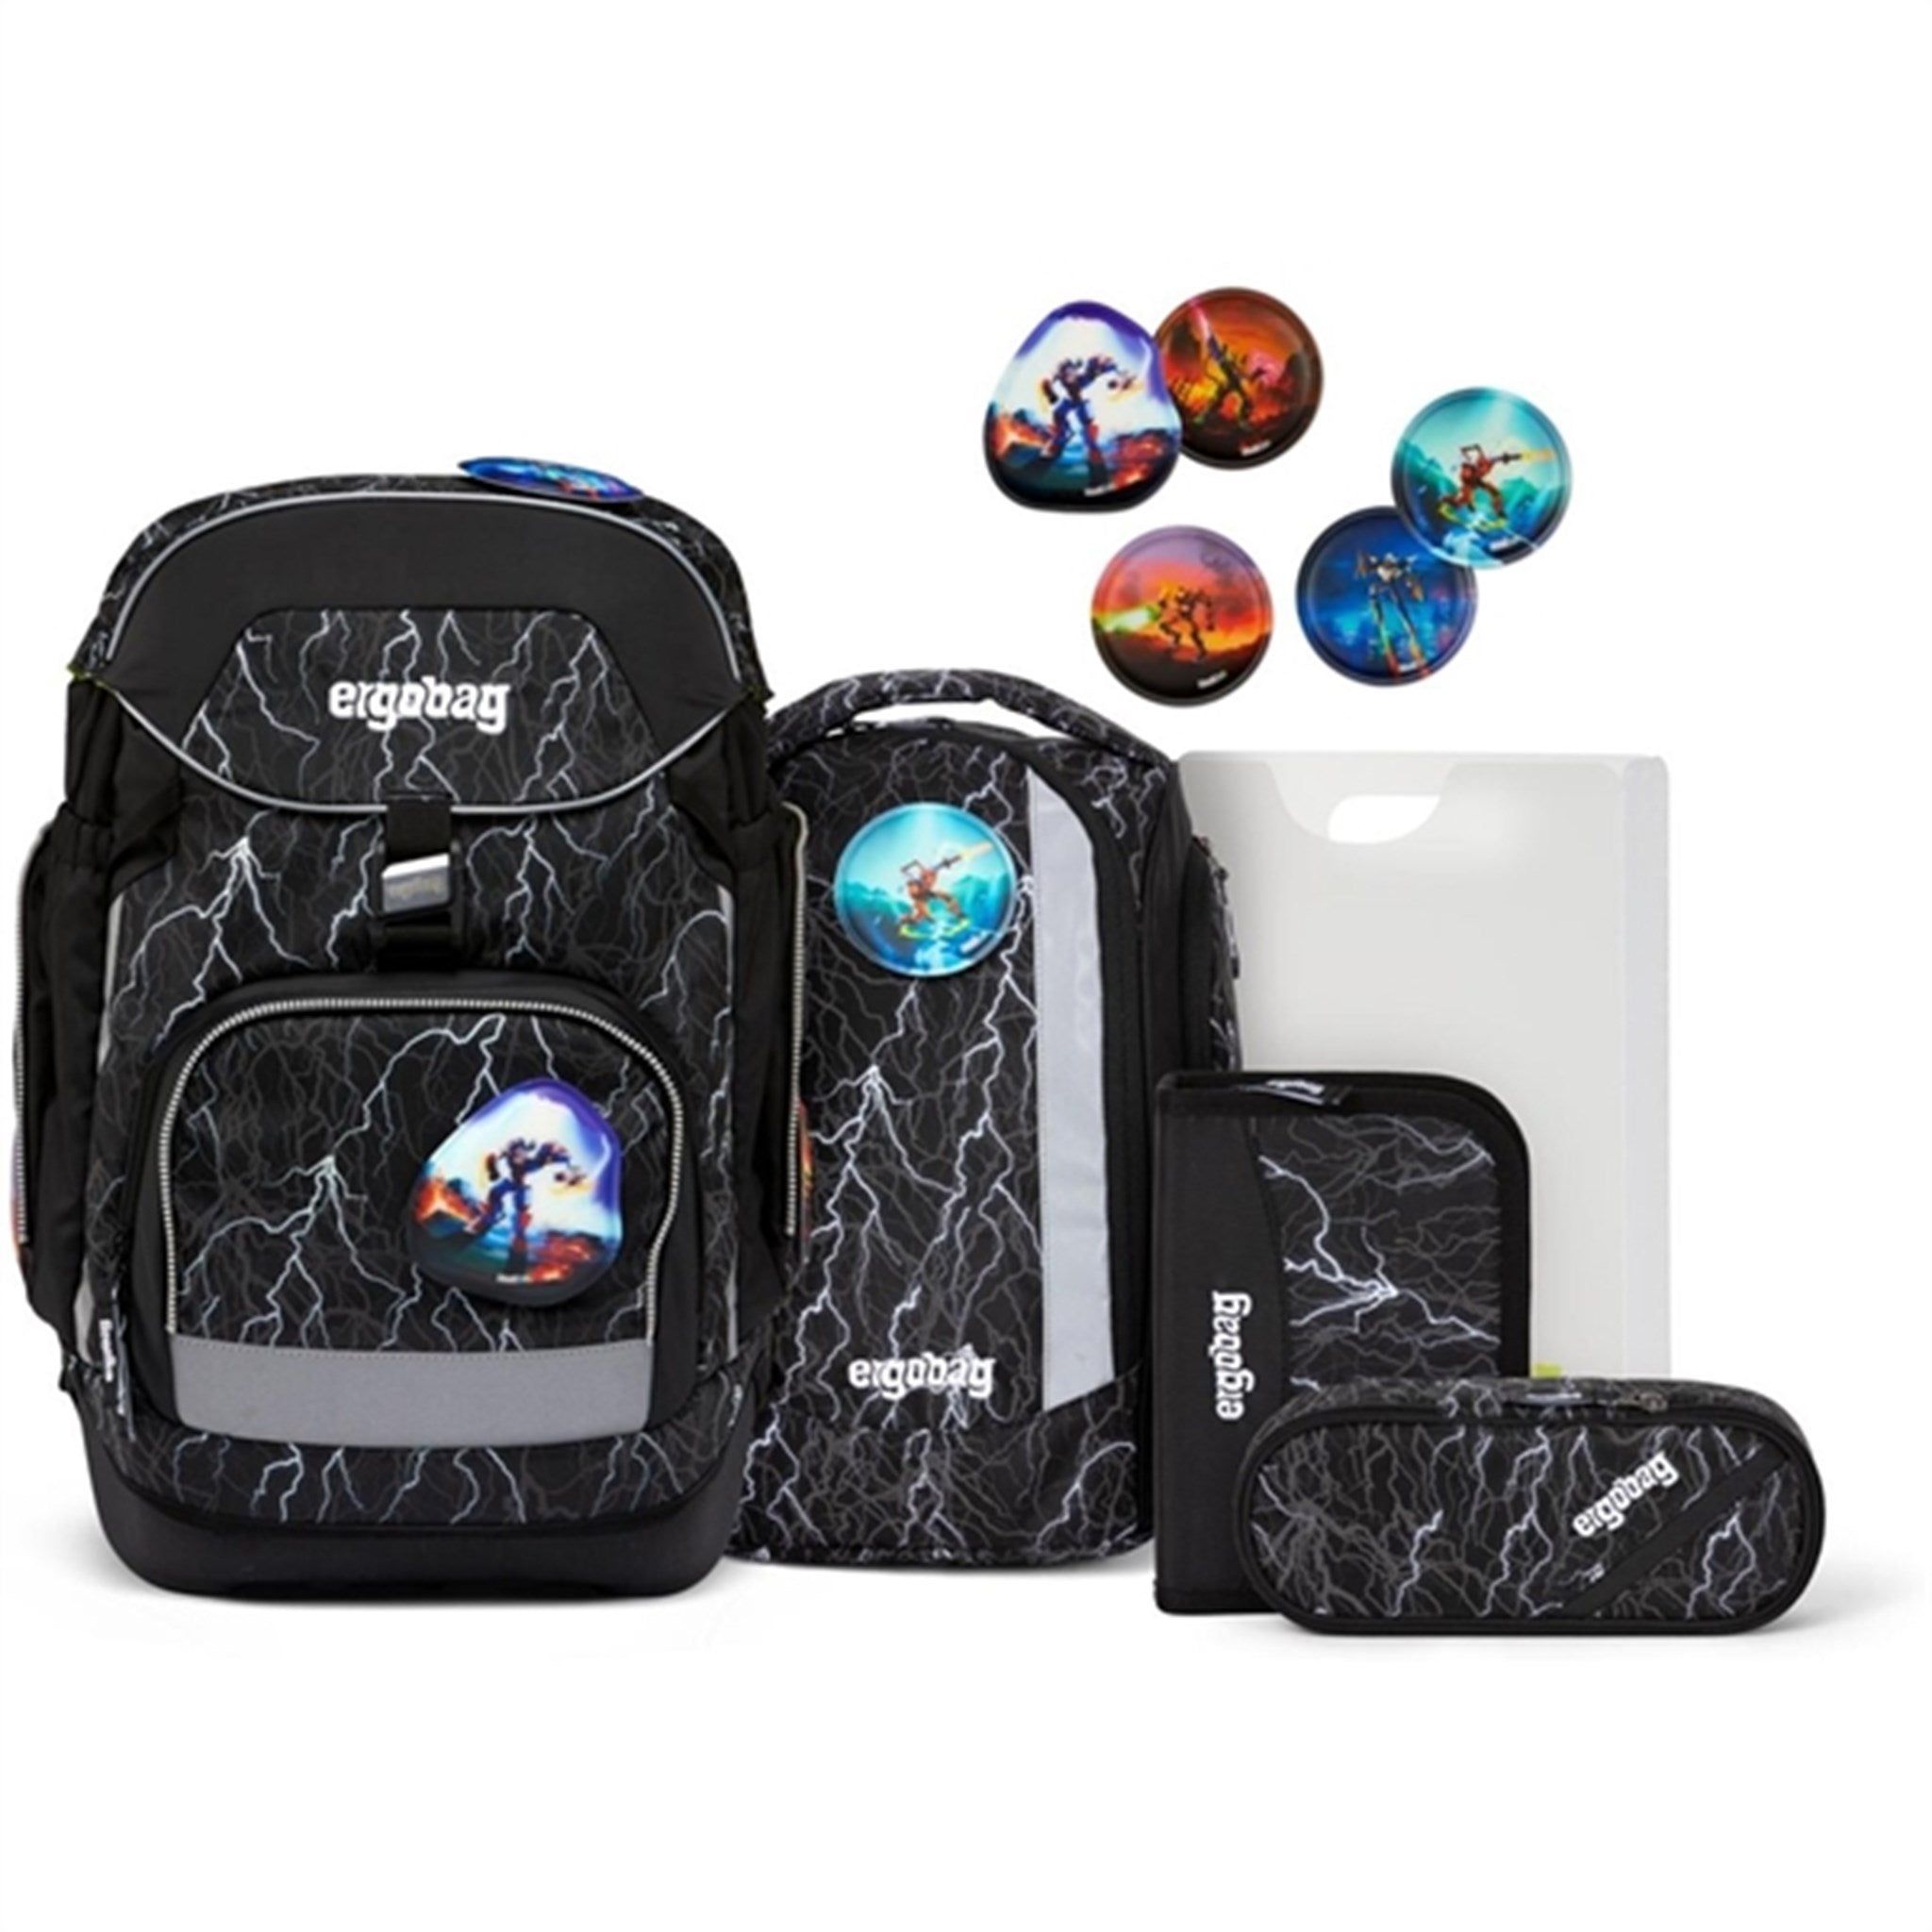 Ergobag School Bag Set Pack Super ReflectBear